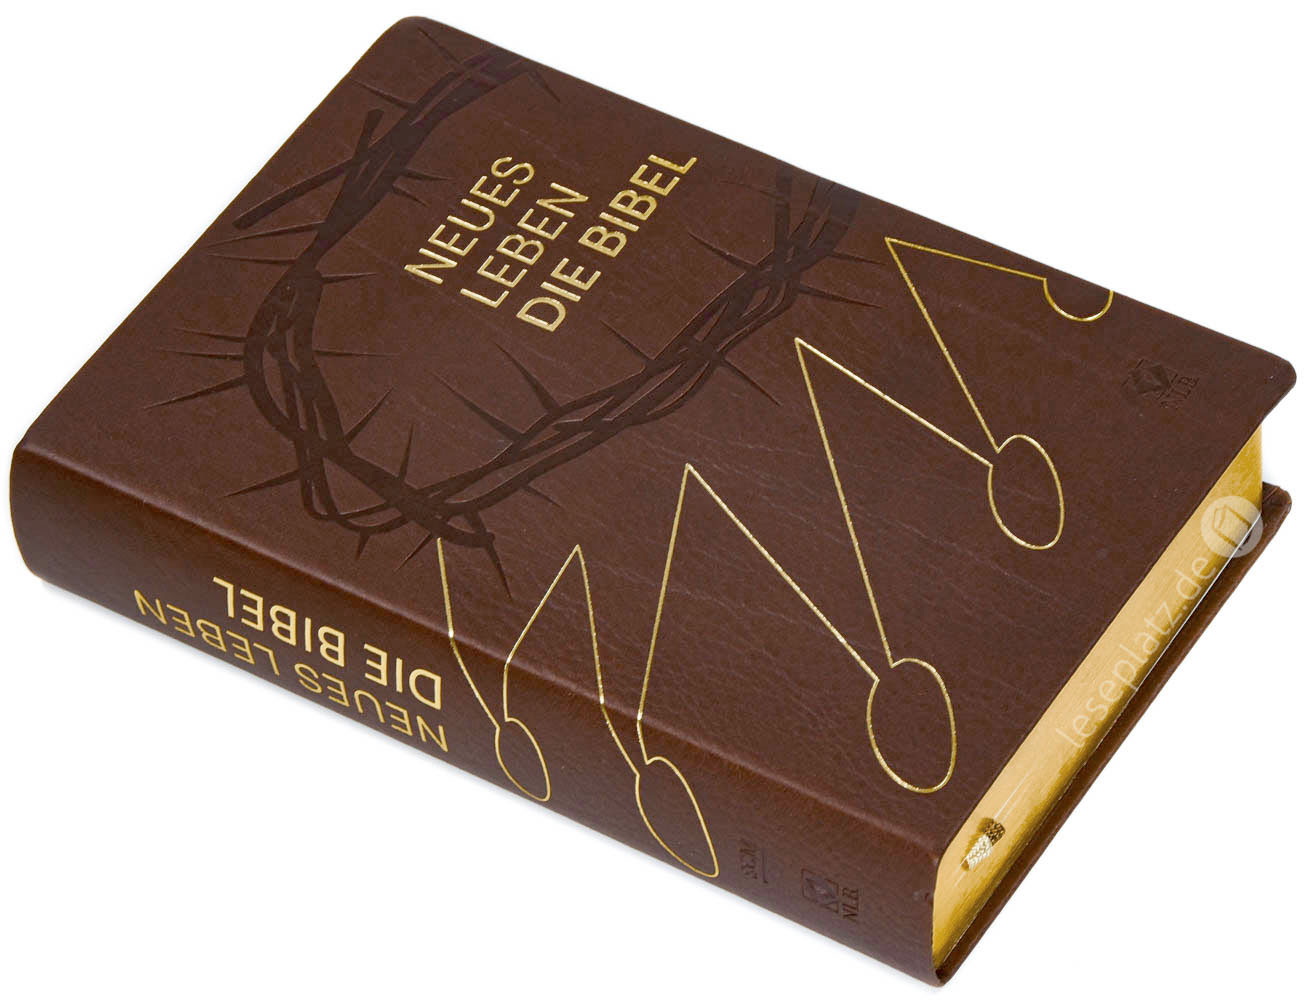 Neues Leben. Die Bibel - Standardausgabe - Kunstleder rotbraun/ Goldschnitt